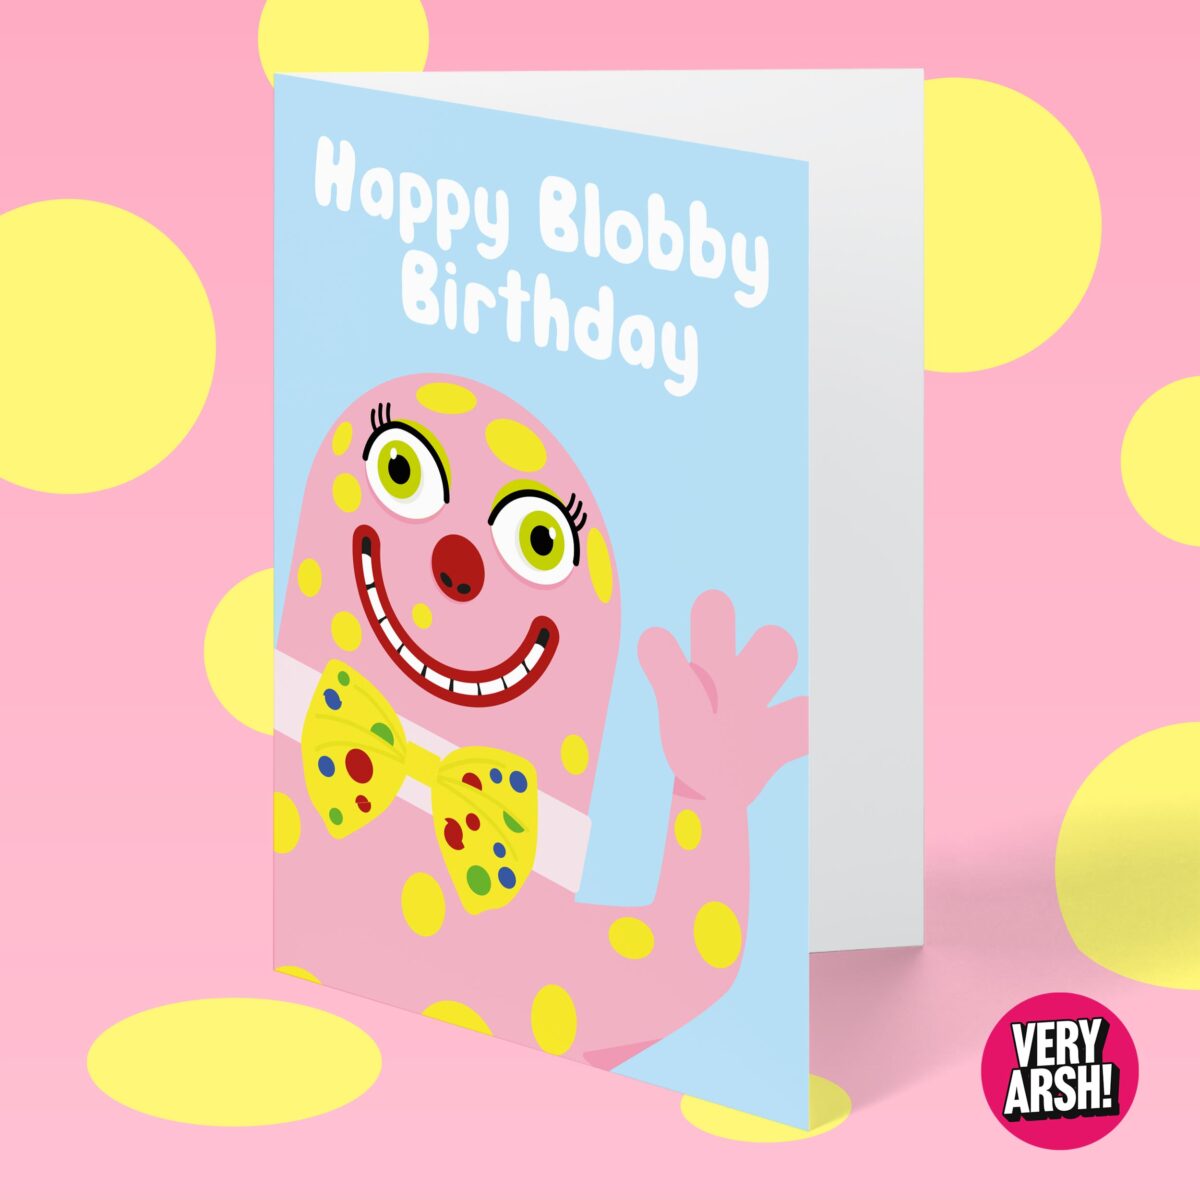 Happy Blobby Birthday - Mr Blobby inspired Birthday Card, Greeting Card